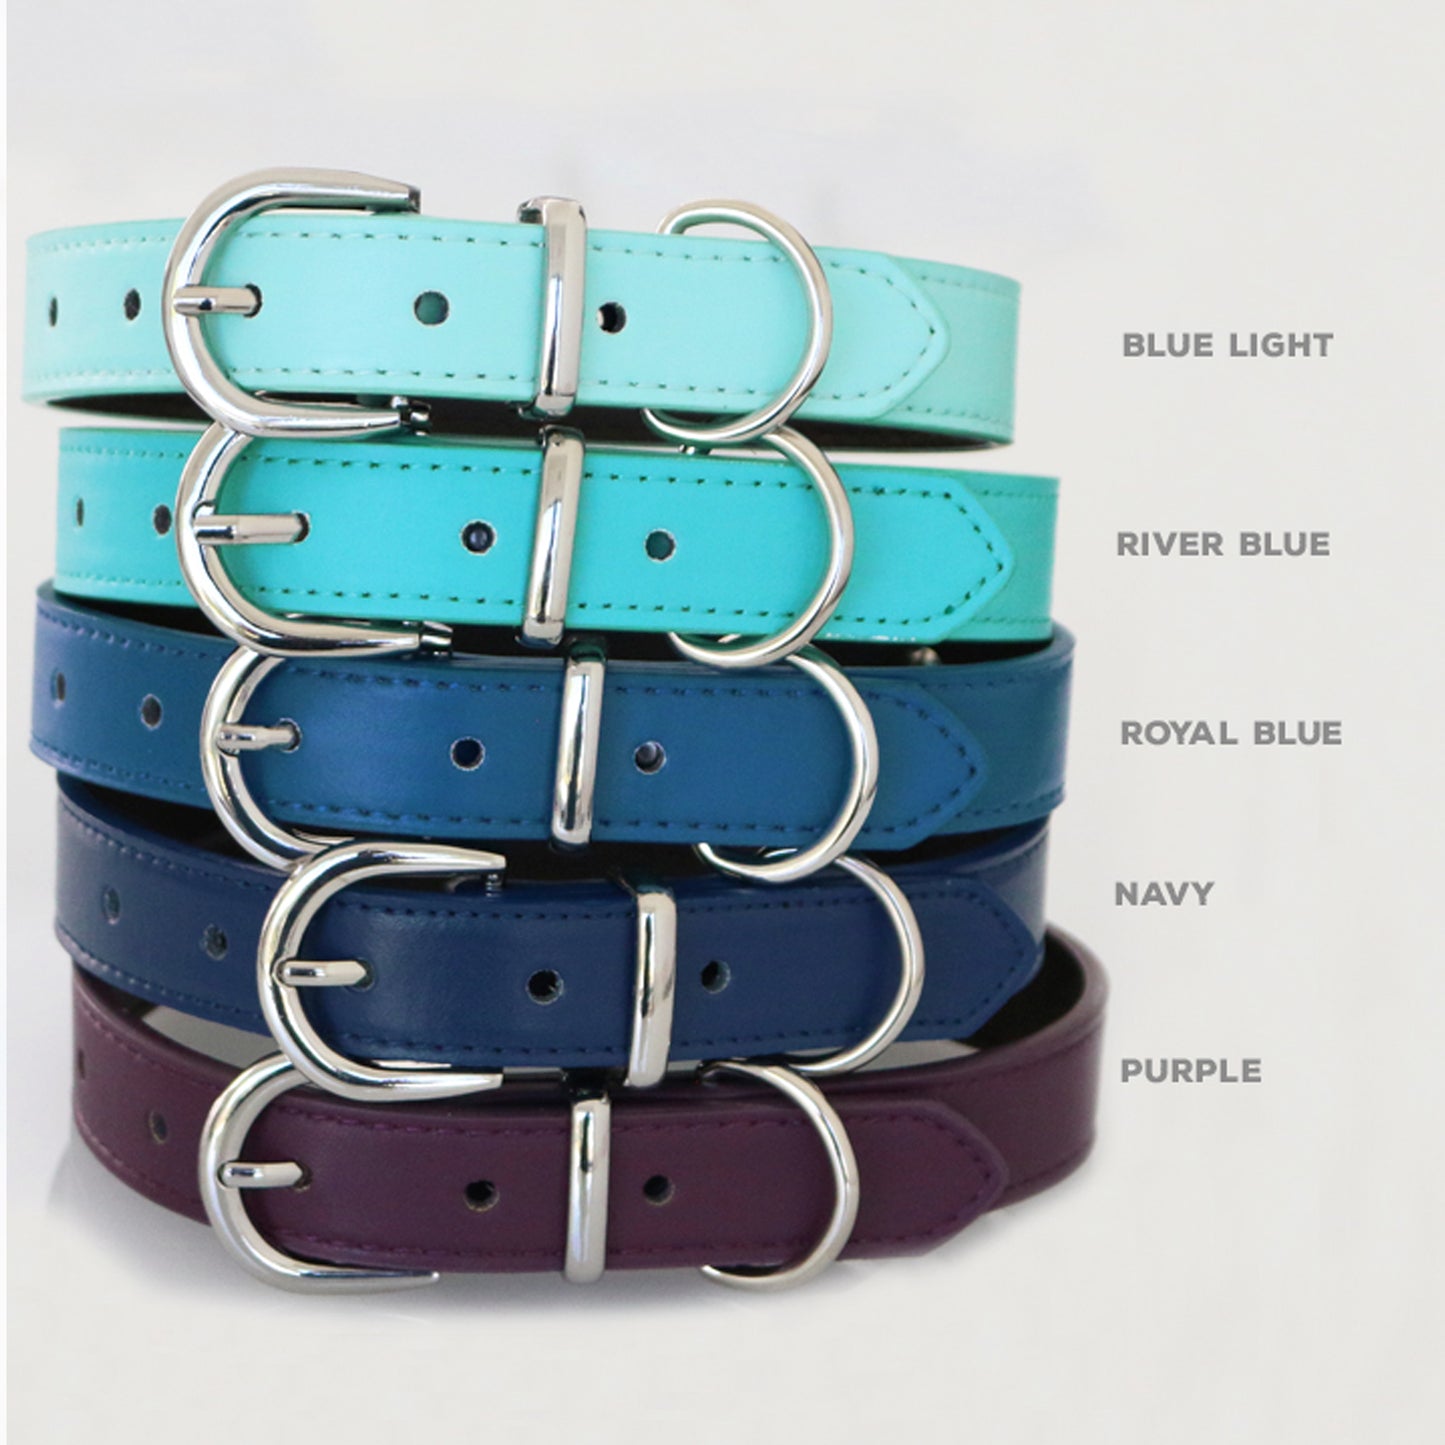 Soft Pink Dog Bow Tie Collar - Dog accessory- Leather dog collar , Wedding dog collar